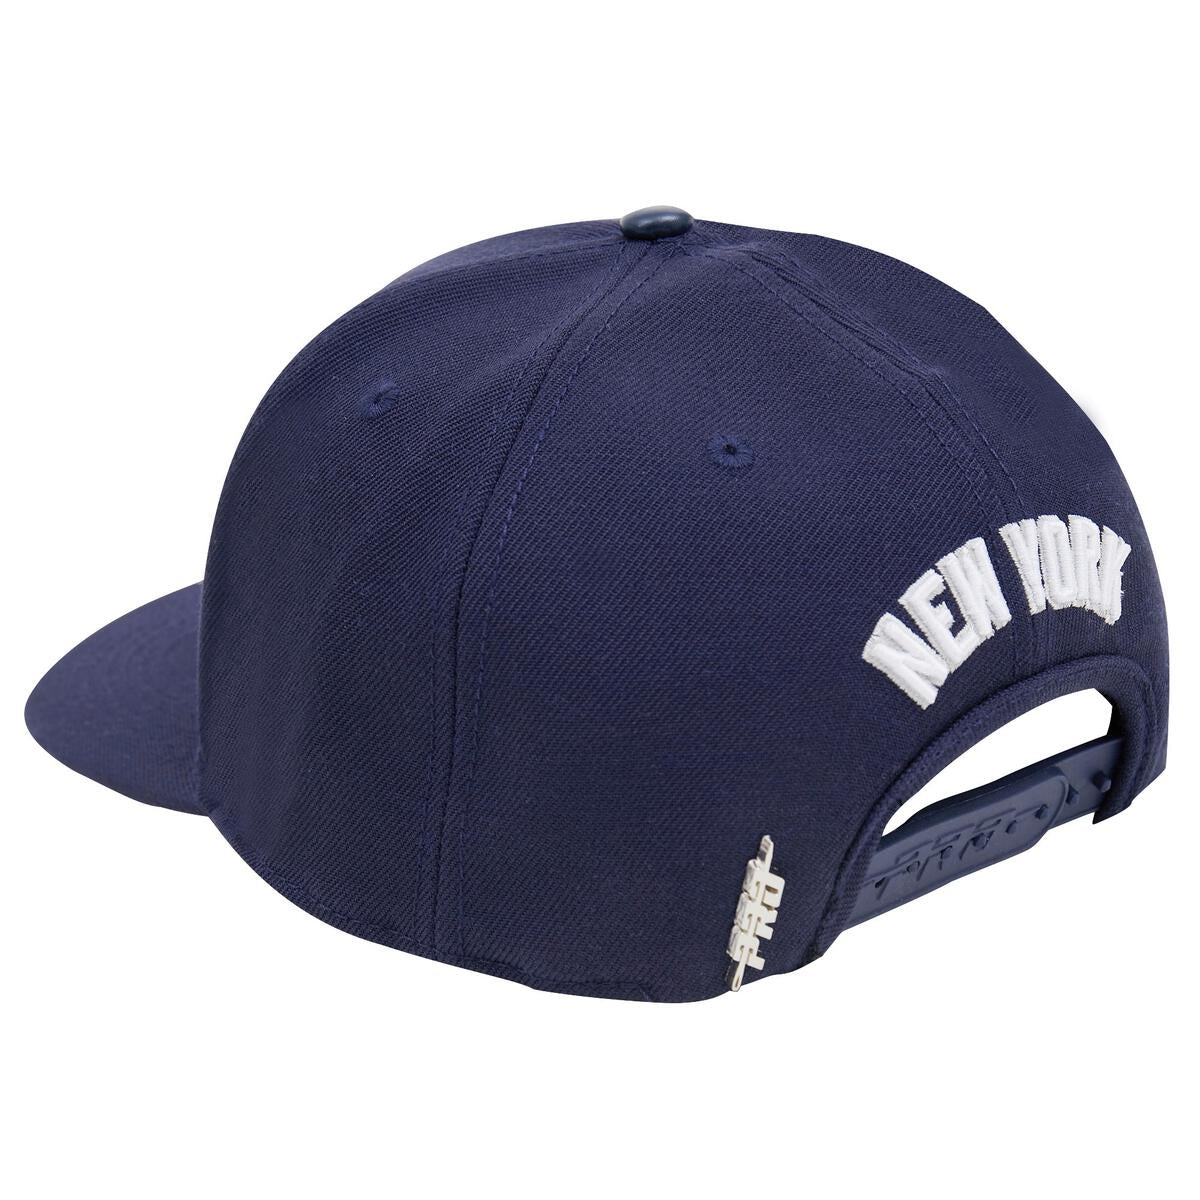 Pro Standard - New York Yankees Logos Snapback Hat